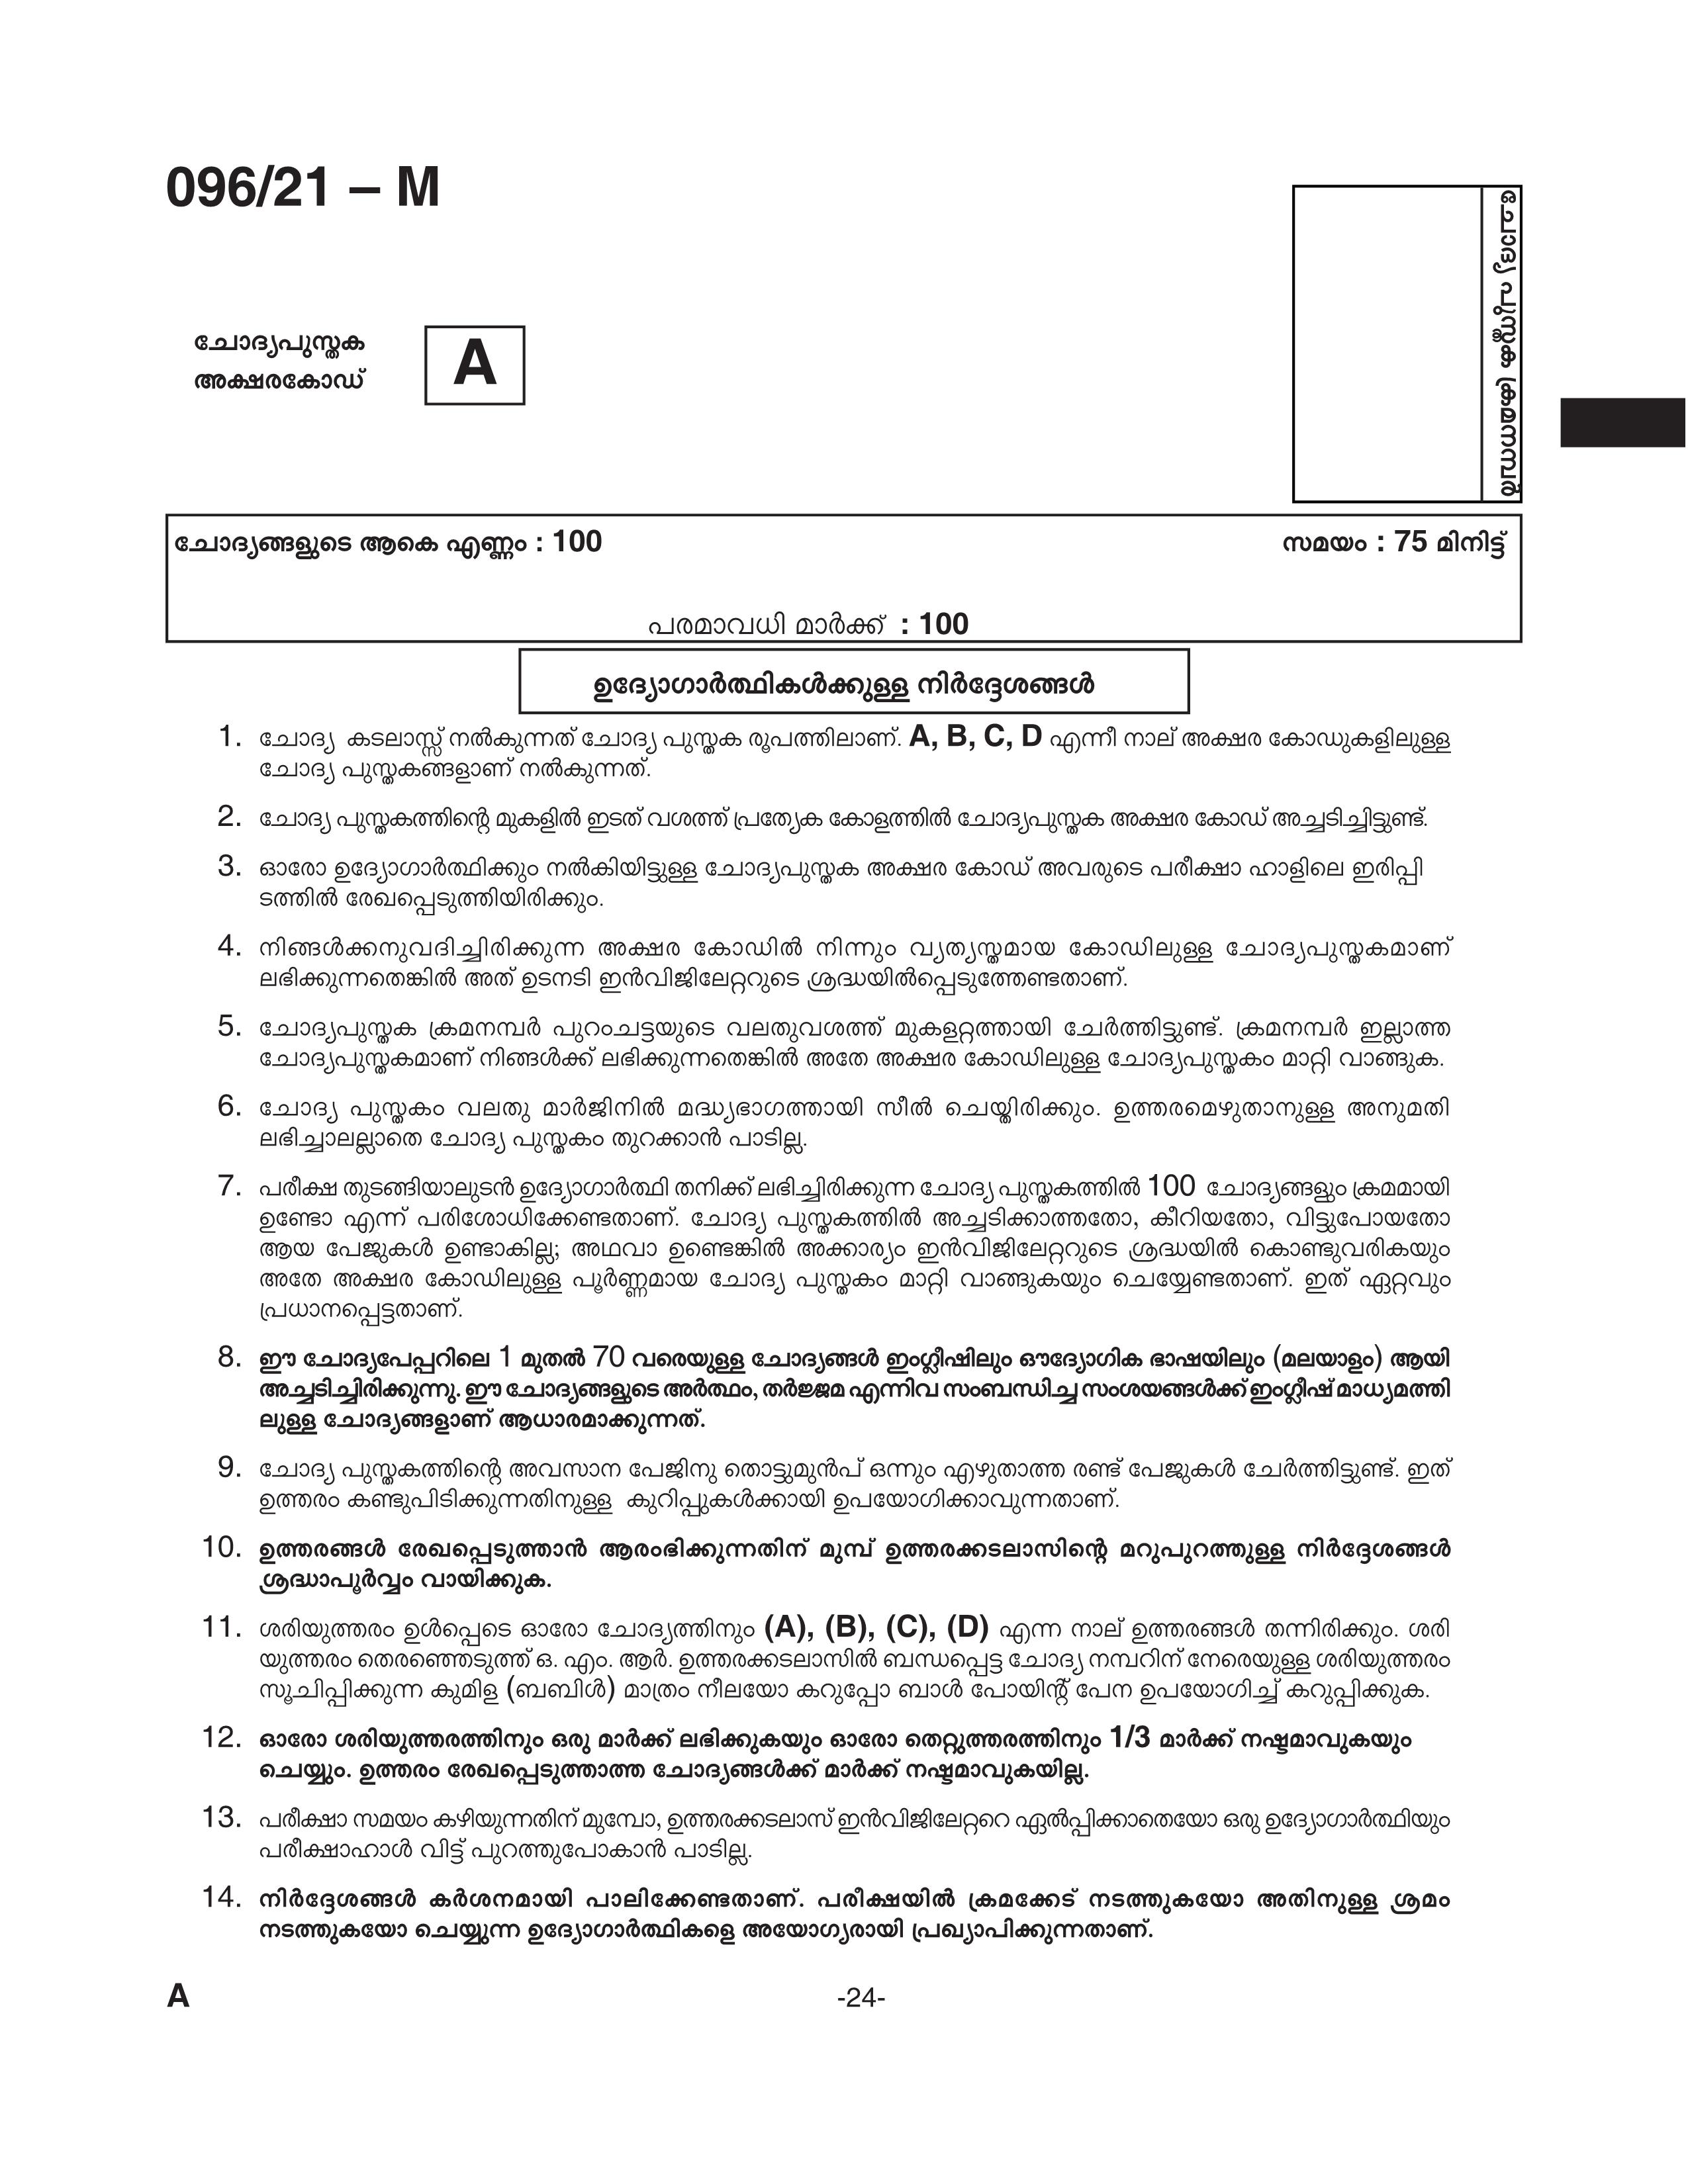 KPSC Degree Level Preliminary Exam Stage II Malayalam 2021 Code 09621 M 22